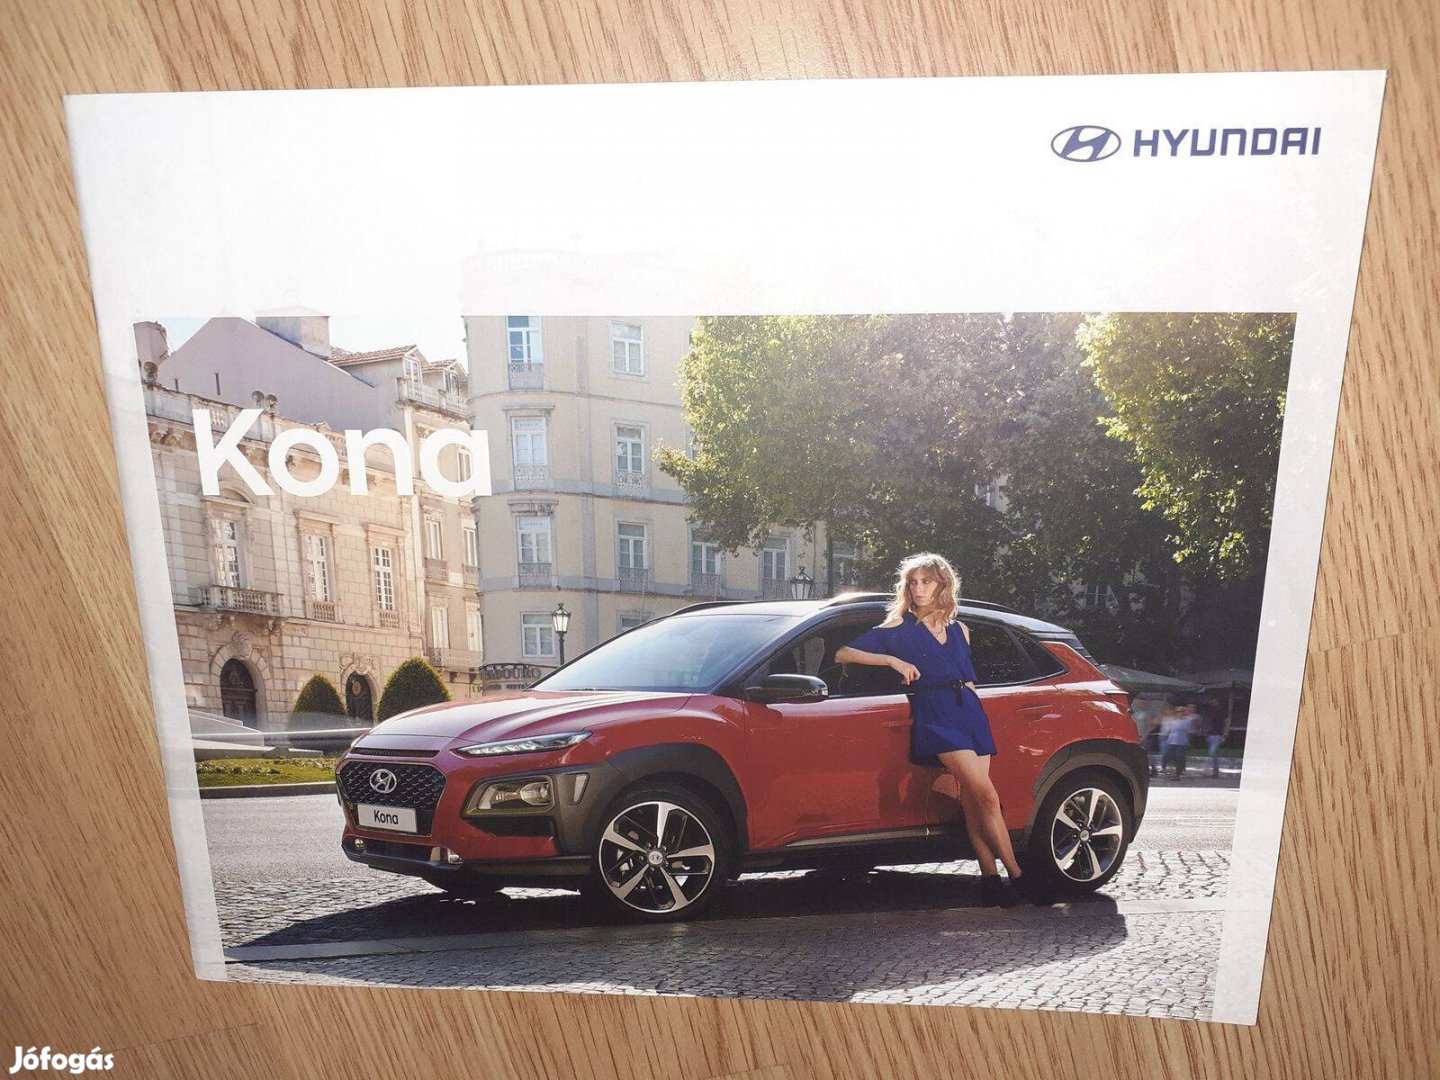 Hyundai Kona prospektus - 2017, magyar nyelvű